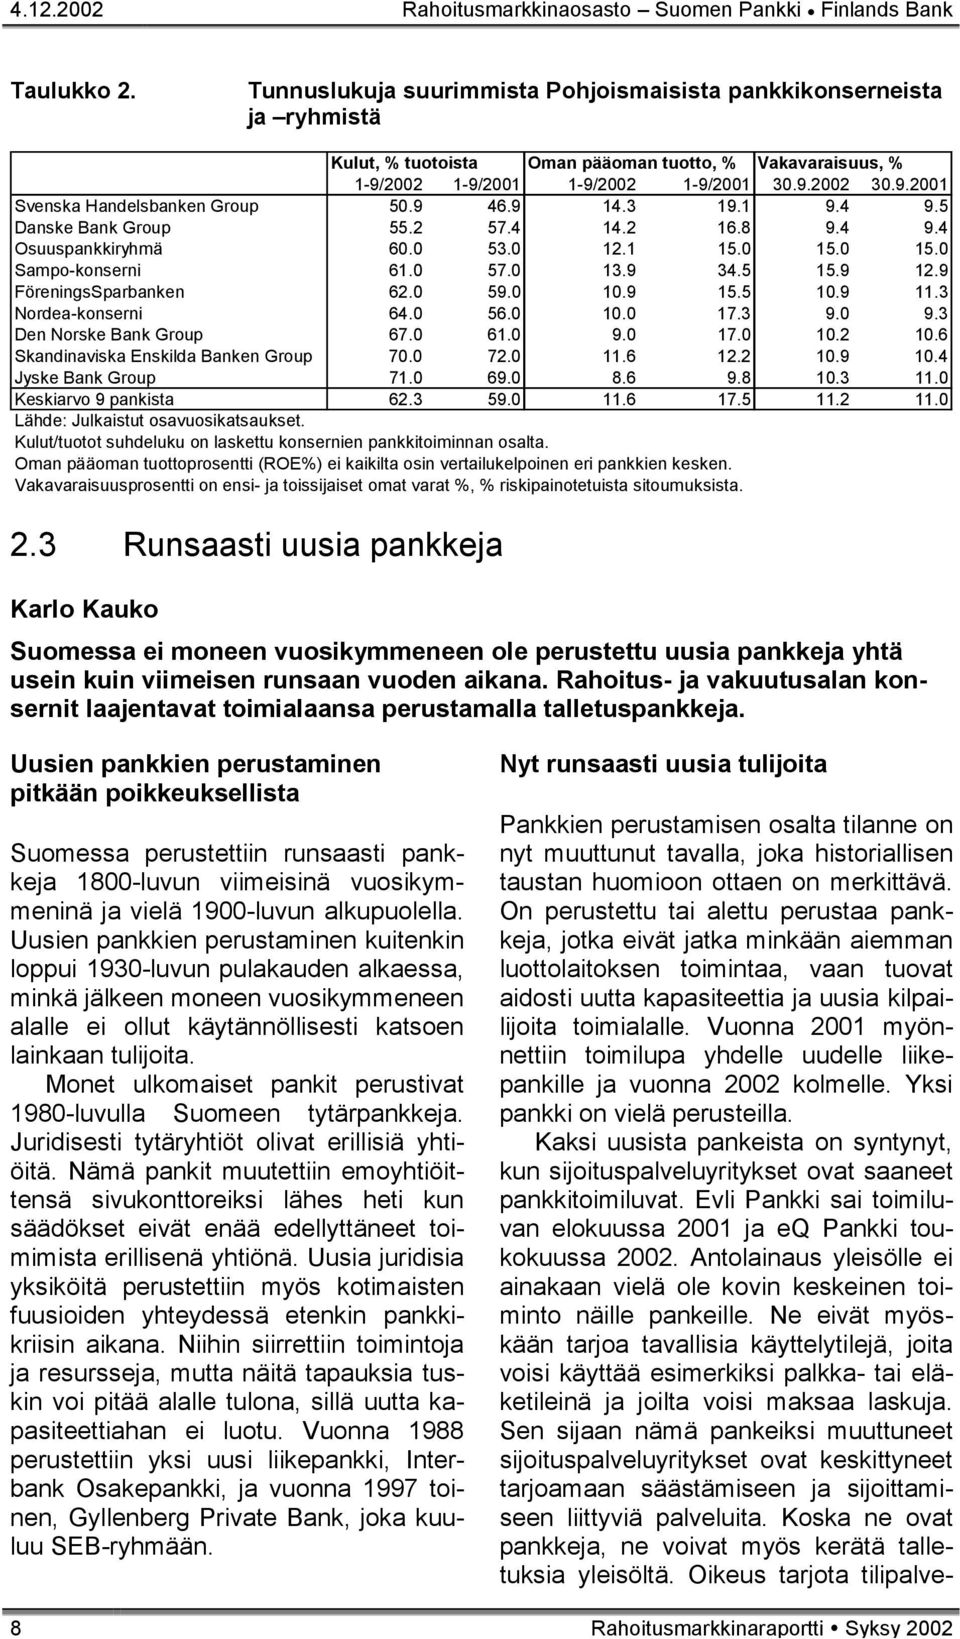 9 46.9 14.3 19.1 9.4 9.5 Danske Bank Group 55.2 57.4 14.2 16.8 9.4 9.4 Osuuspankkiryhmä 60.0 53.0 12.1 15.0 15.0 15.0 Sampo-konserni 61.0 57.0 13.9 34.5 15.9 12.9 FöreningsSparbanken 62.0 59.0 10.